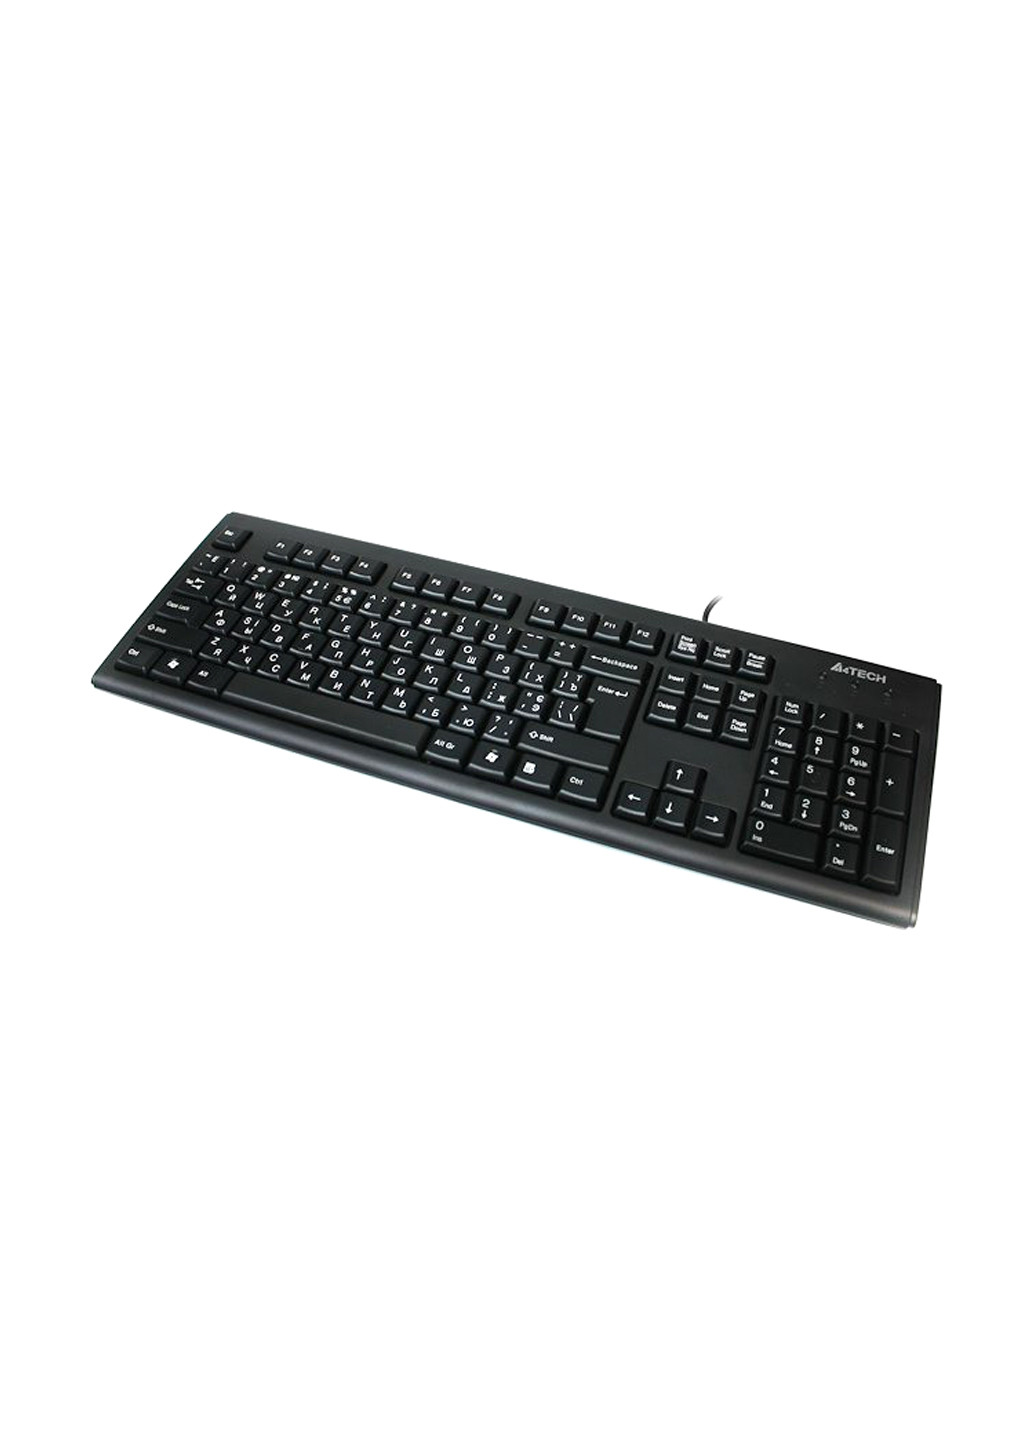 Клавіатура KR-83 PS / 2 (Black) A4Tech kr-83 ps/2 (black) (130301564)